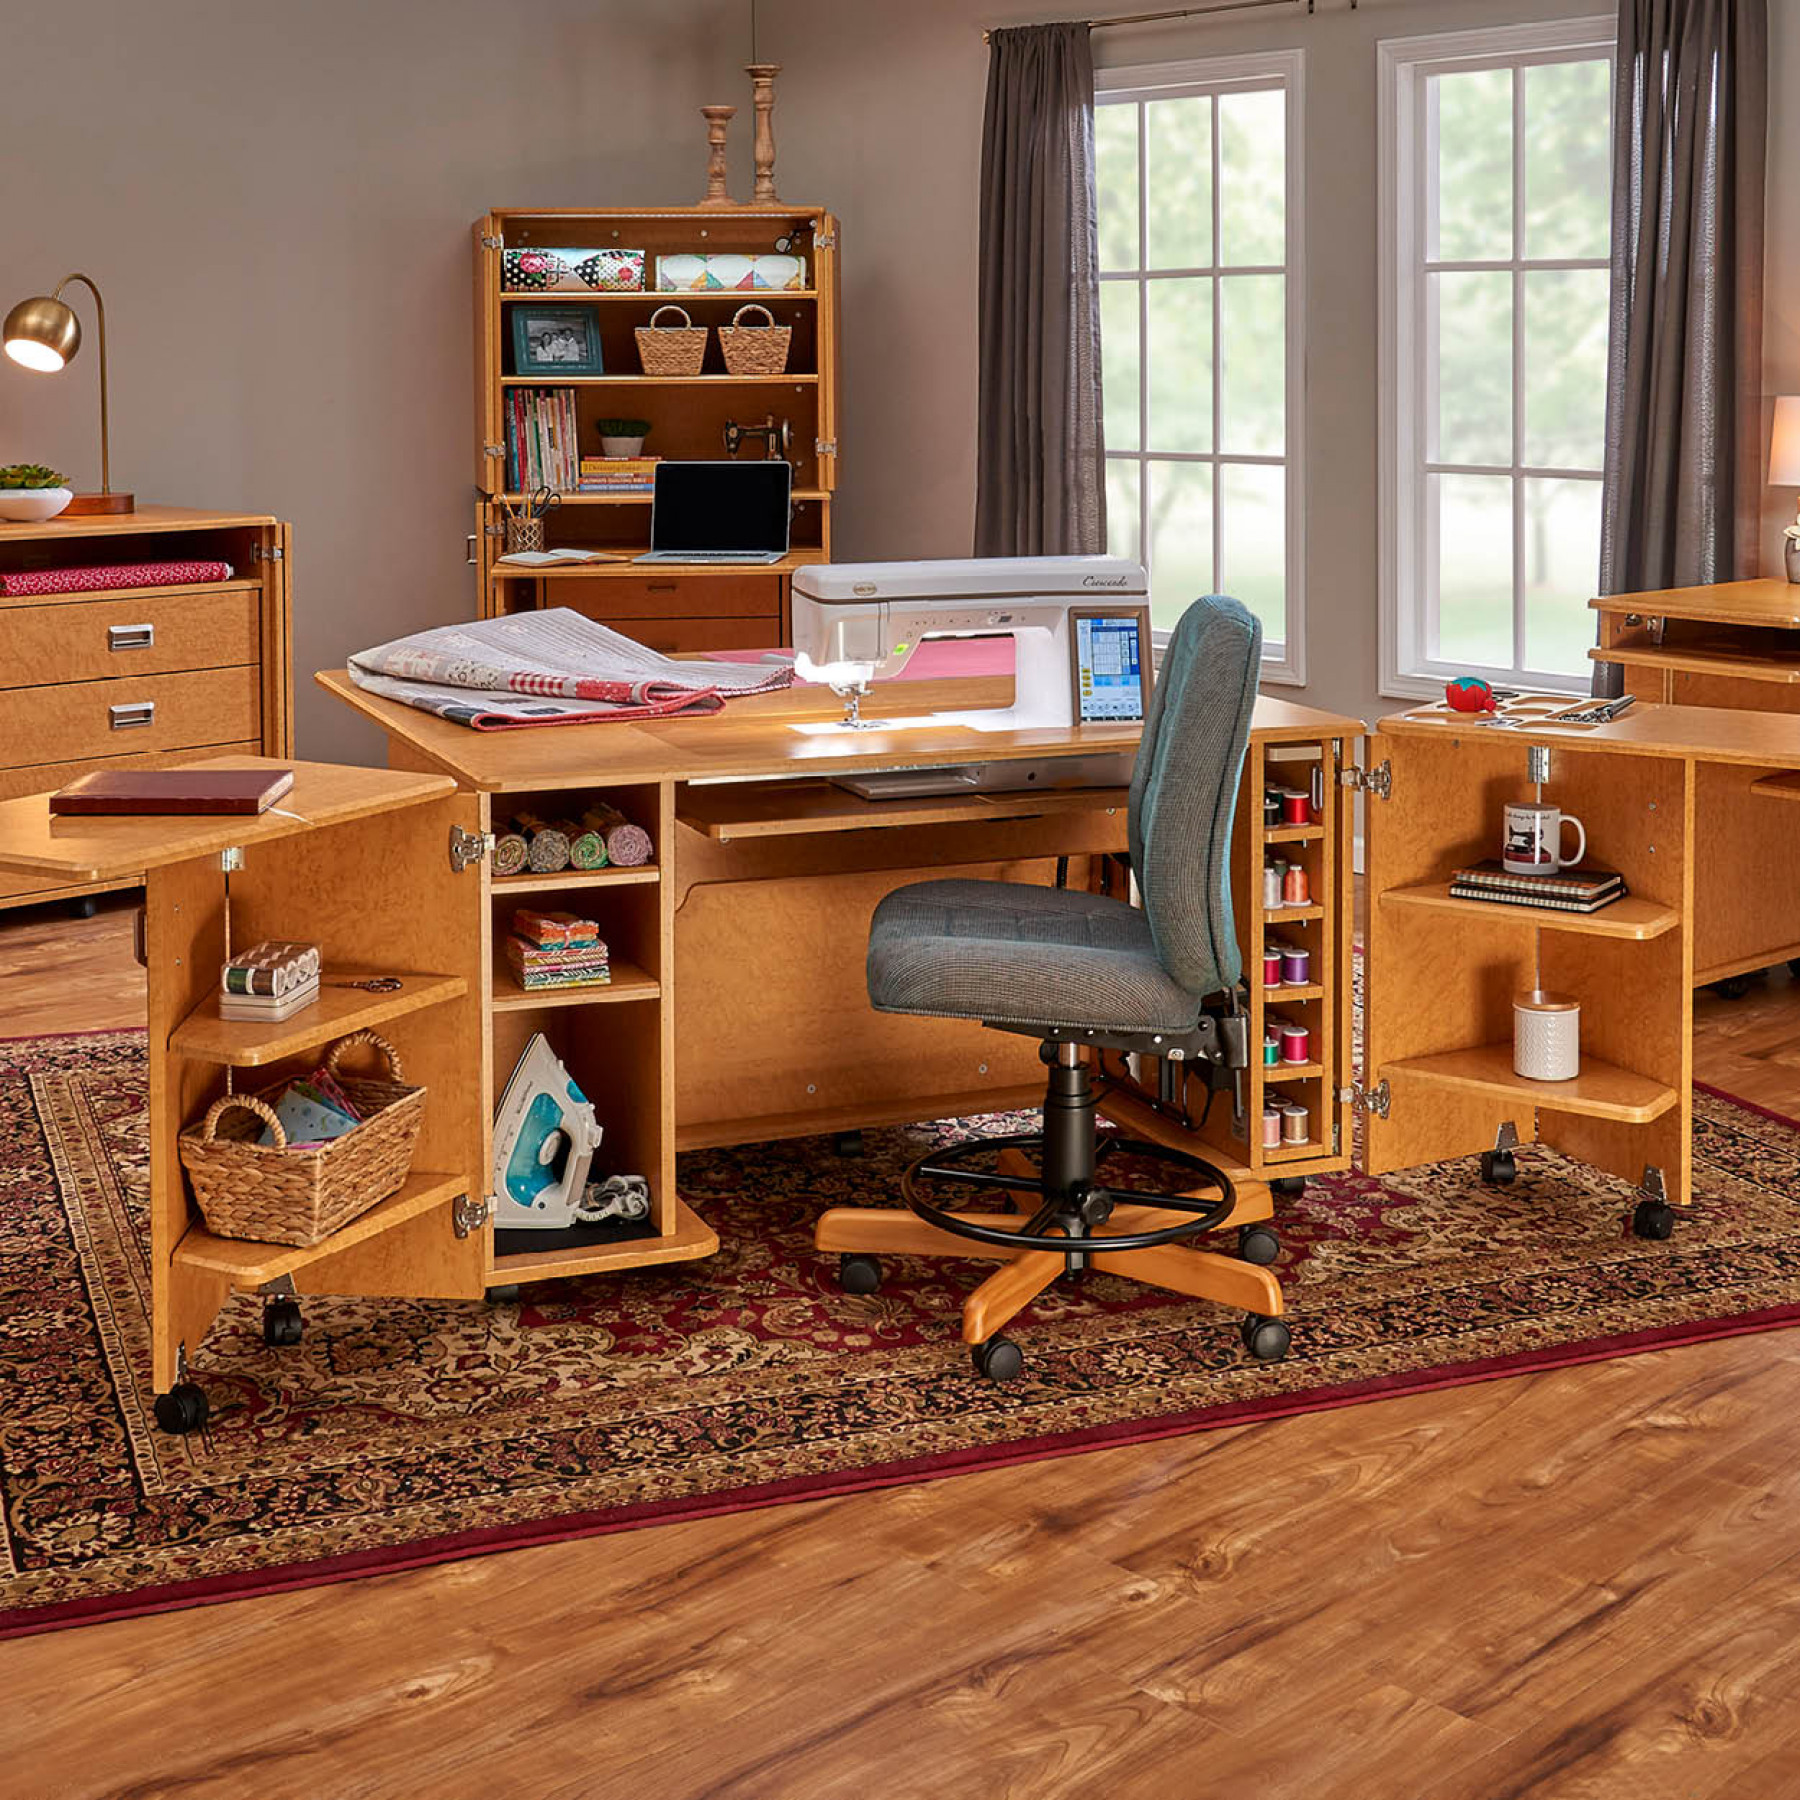 Craftpro Plus Lv Sewing Furniture Sewing Room Inspiration Koala Sewing Cabinets